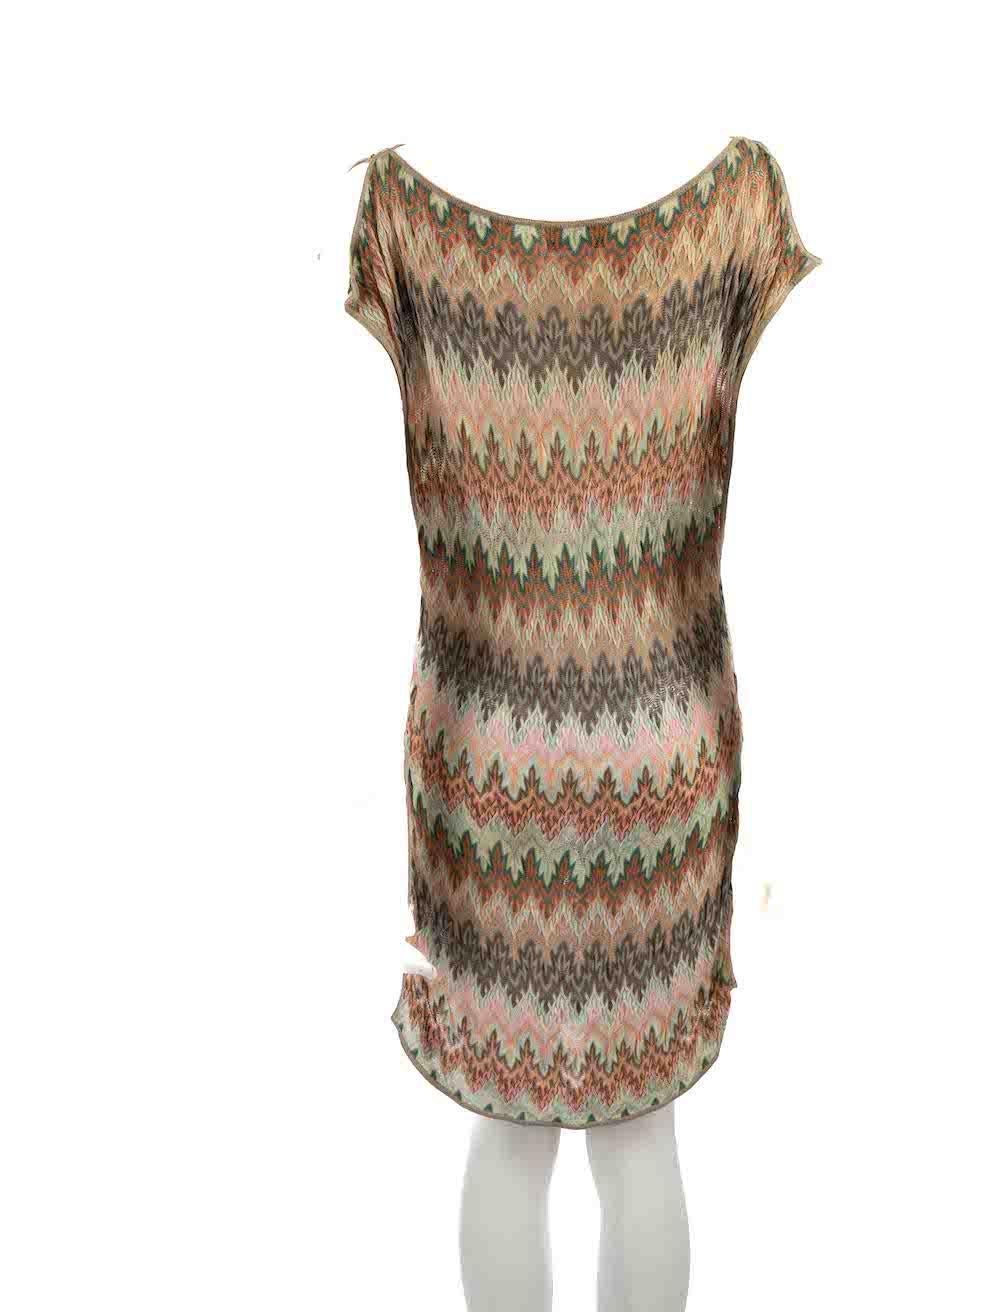 Missoni Missoni Mare Sleeveless Crochet Mini Beach Dress Size XS In Good Condition For Sale In London, GB